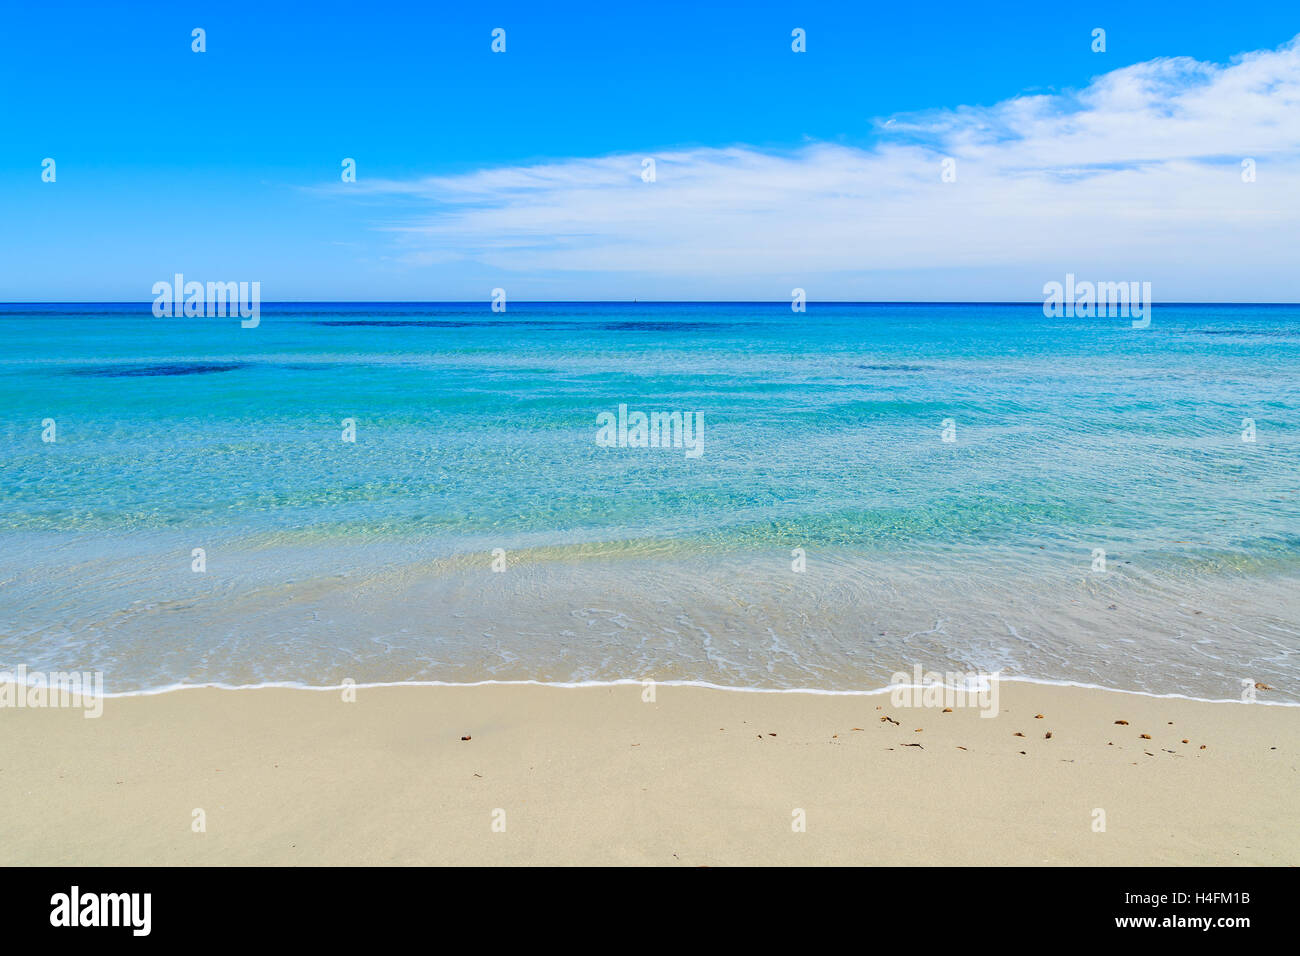 Turquoise sea and sand, Villasimius beach, Sardinia island, Italy Stock Photo